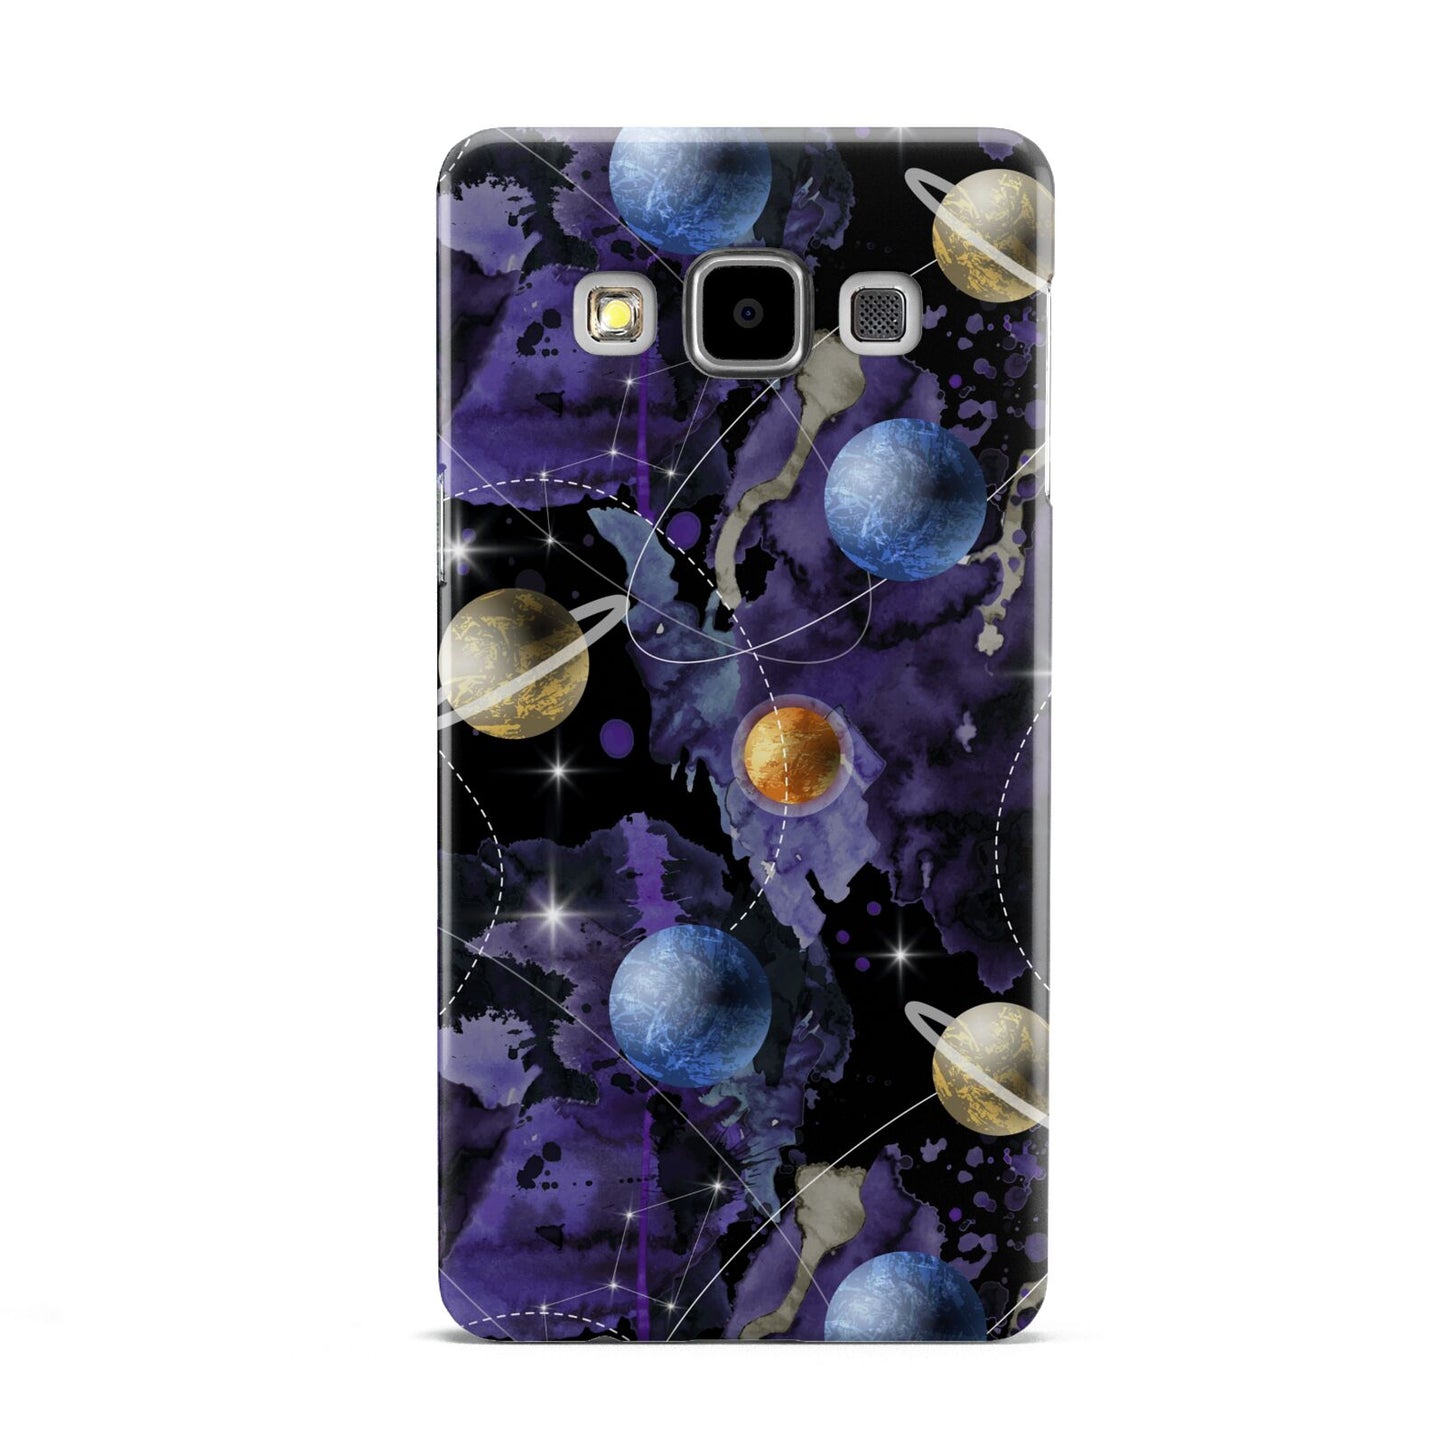 Planet Samsung Galaxy A5 Case